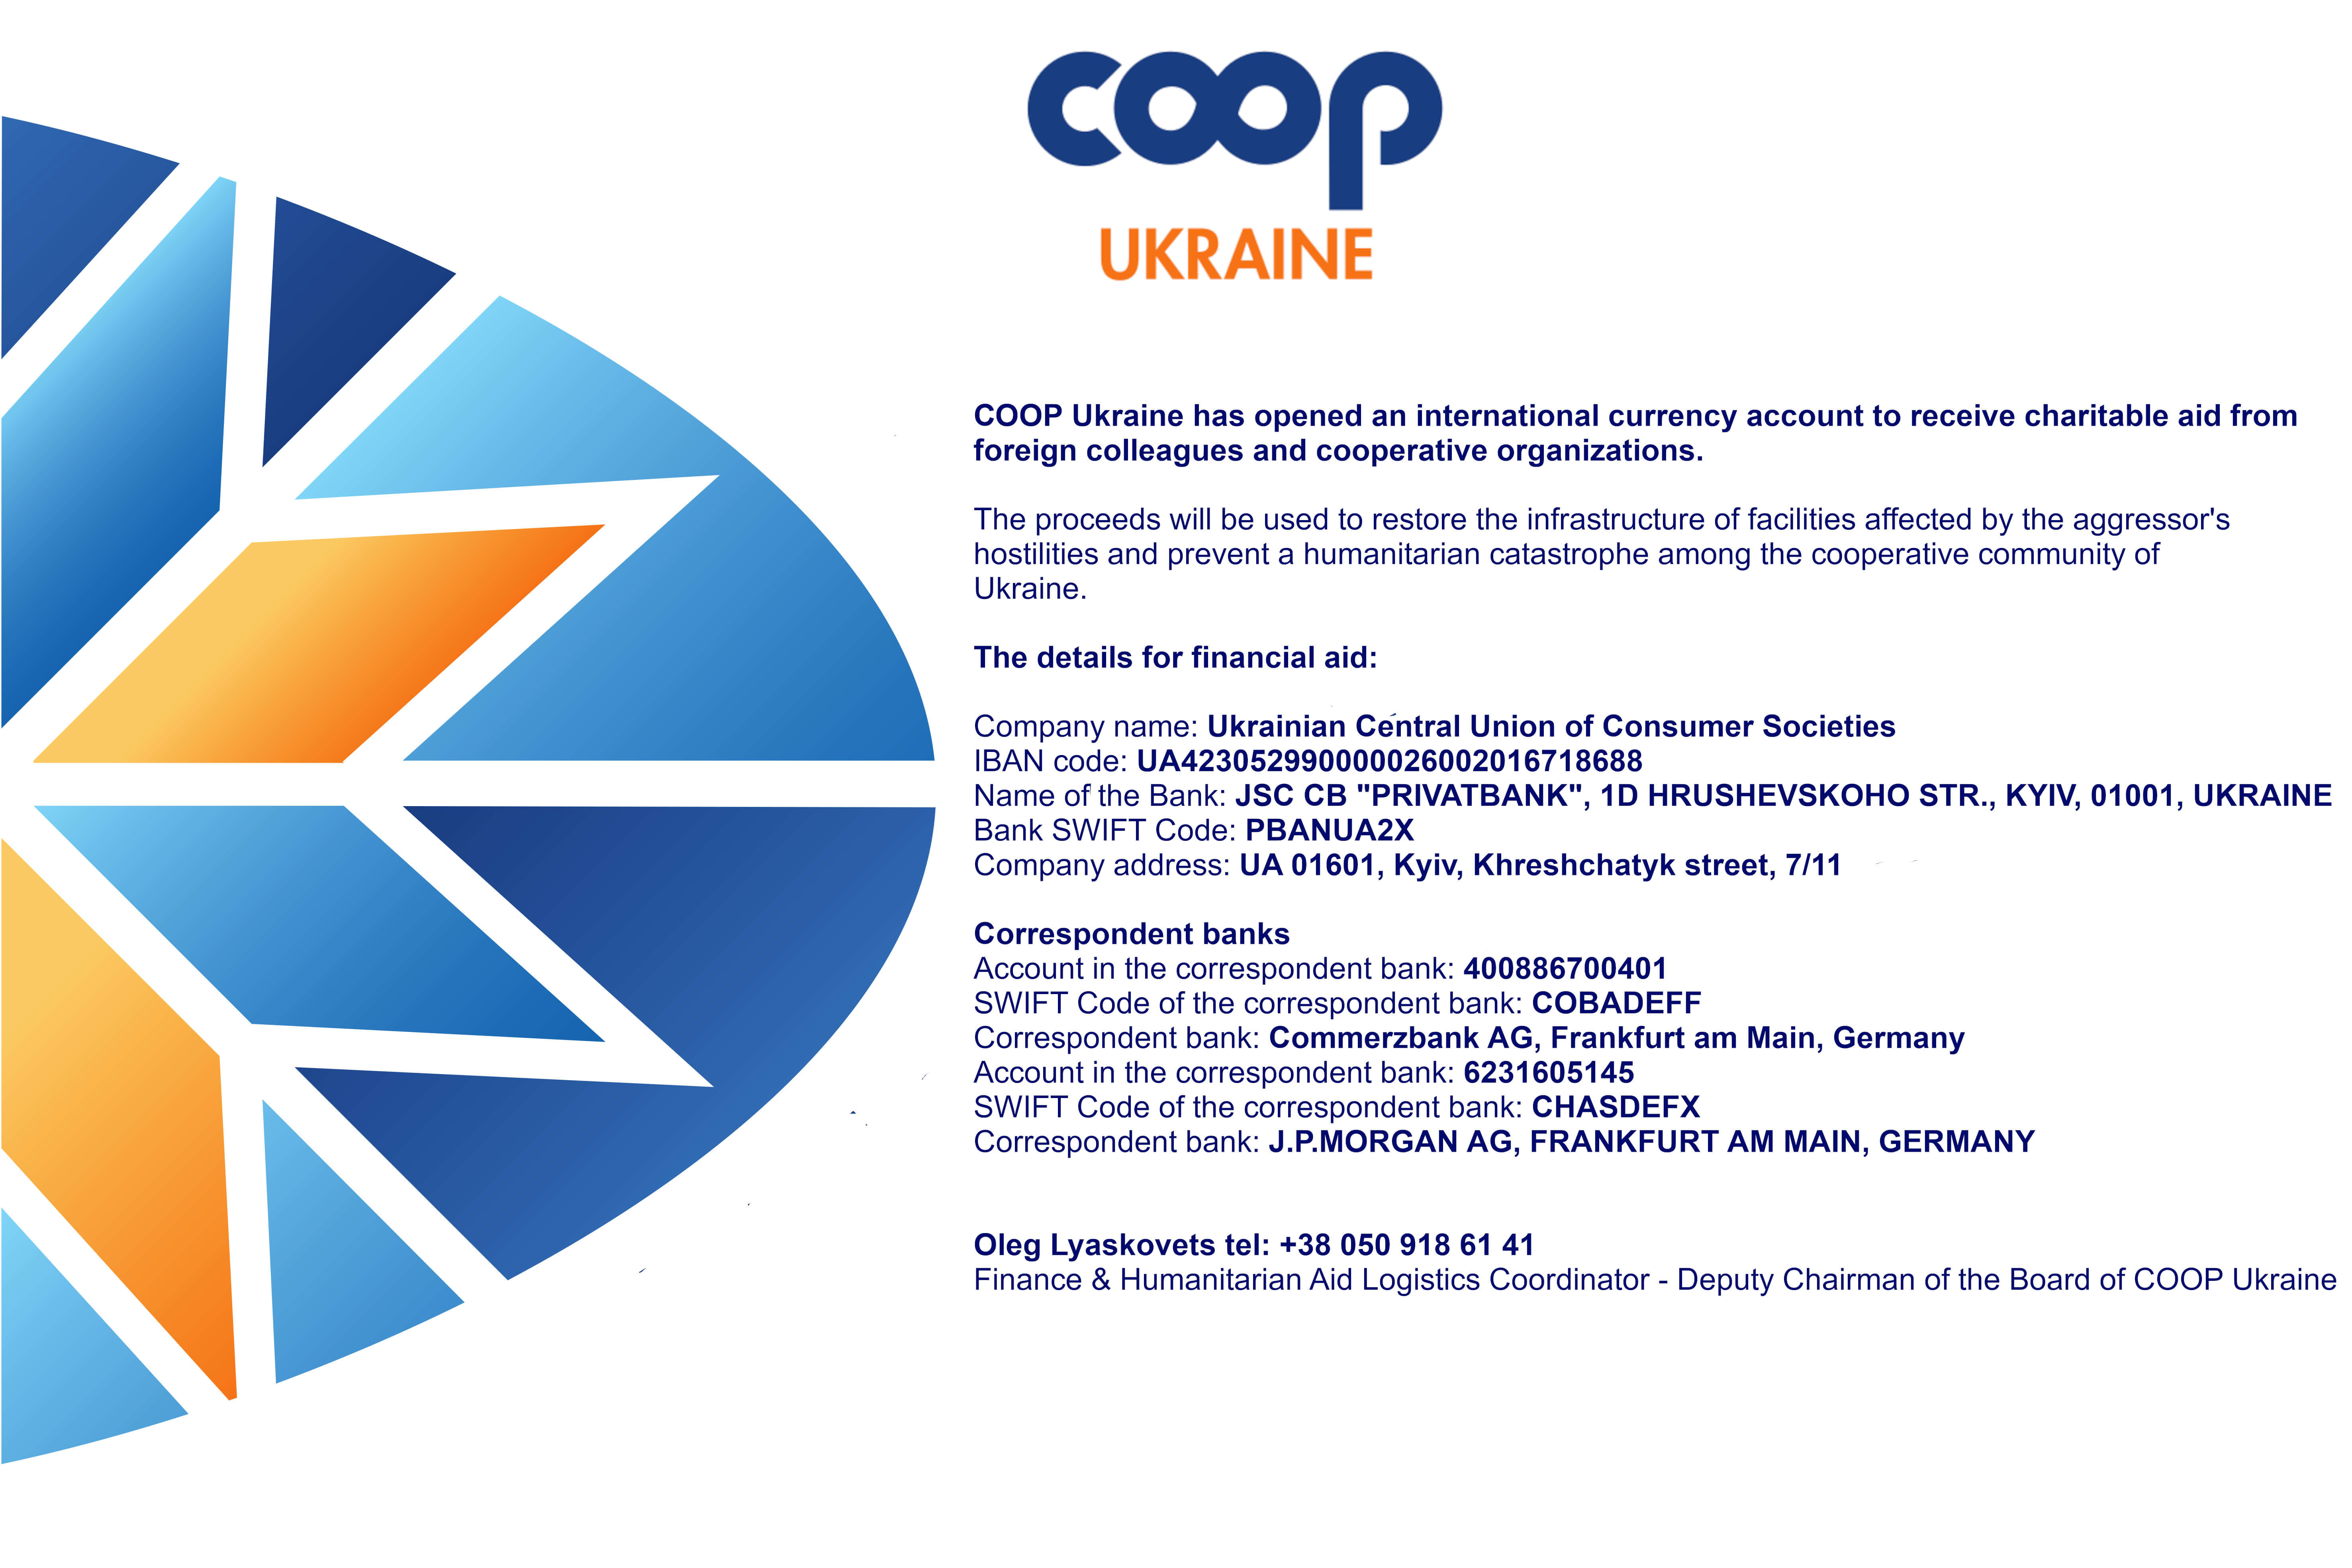 Financе Humanitarian Aid for COOP Ukraine 003